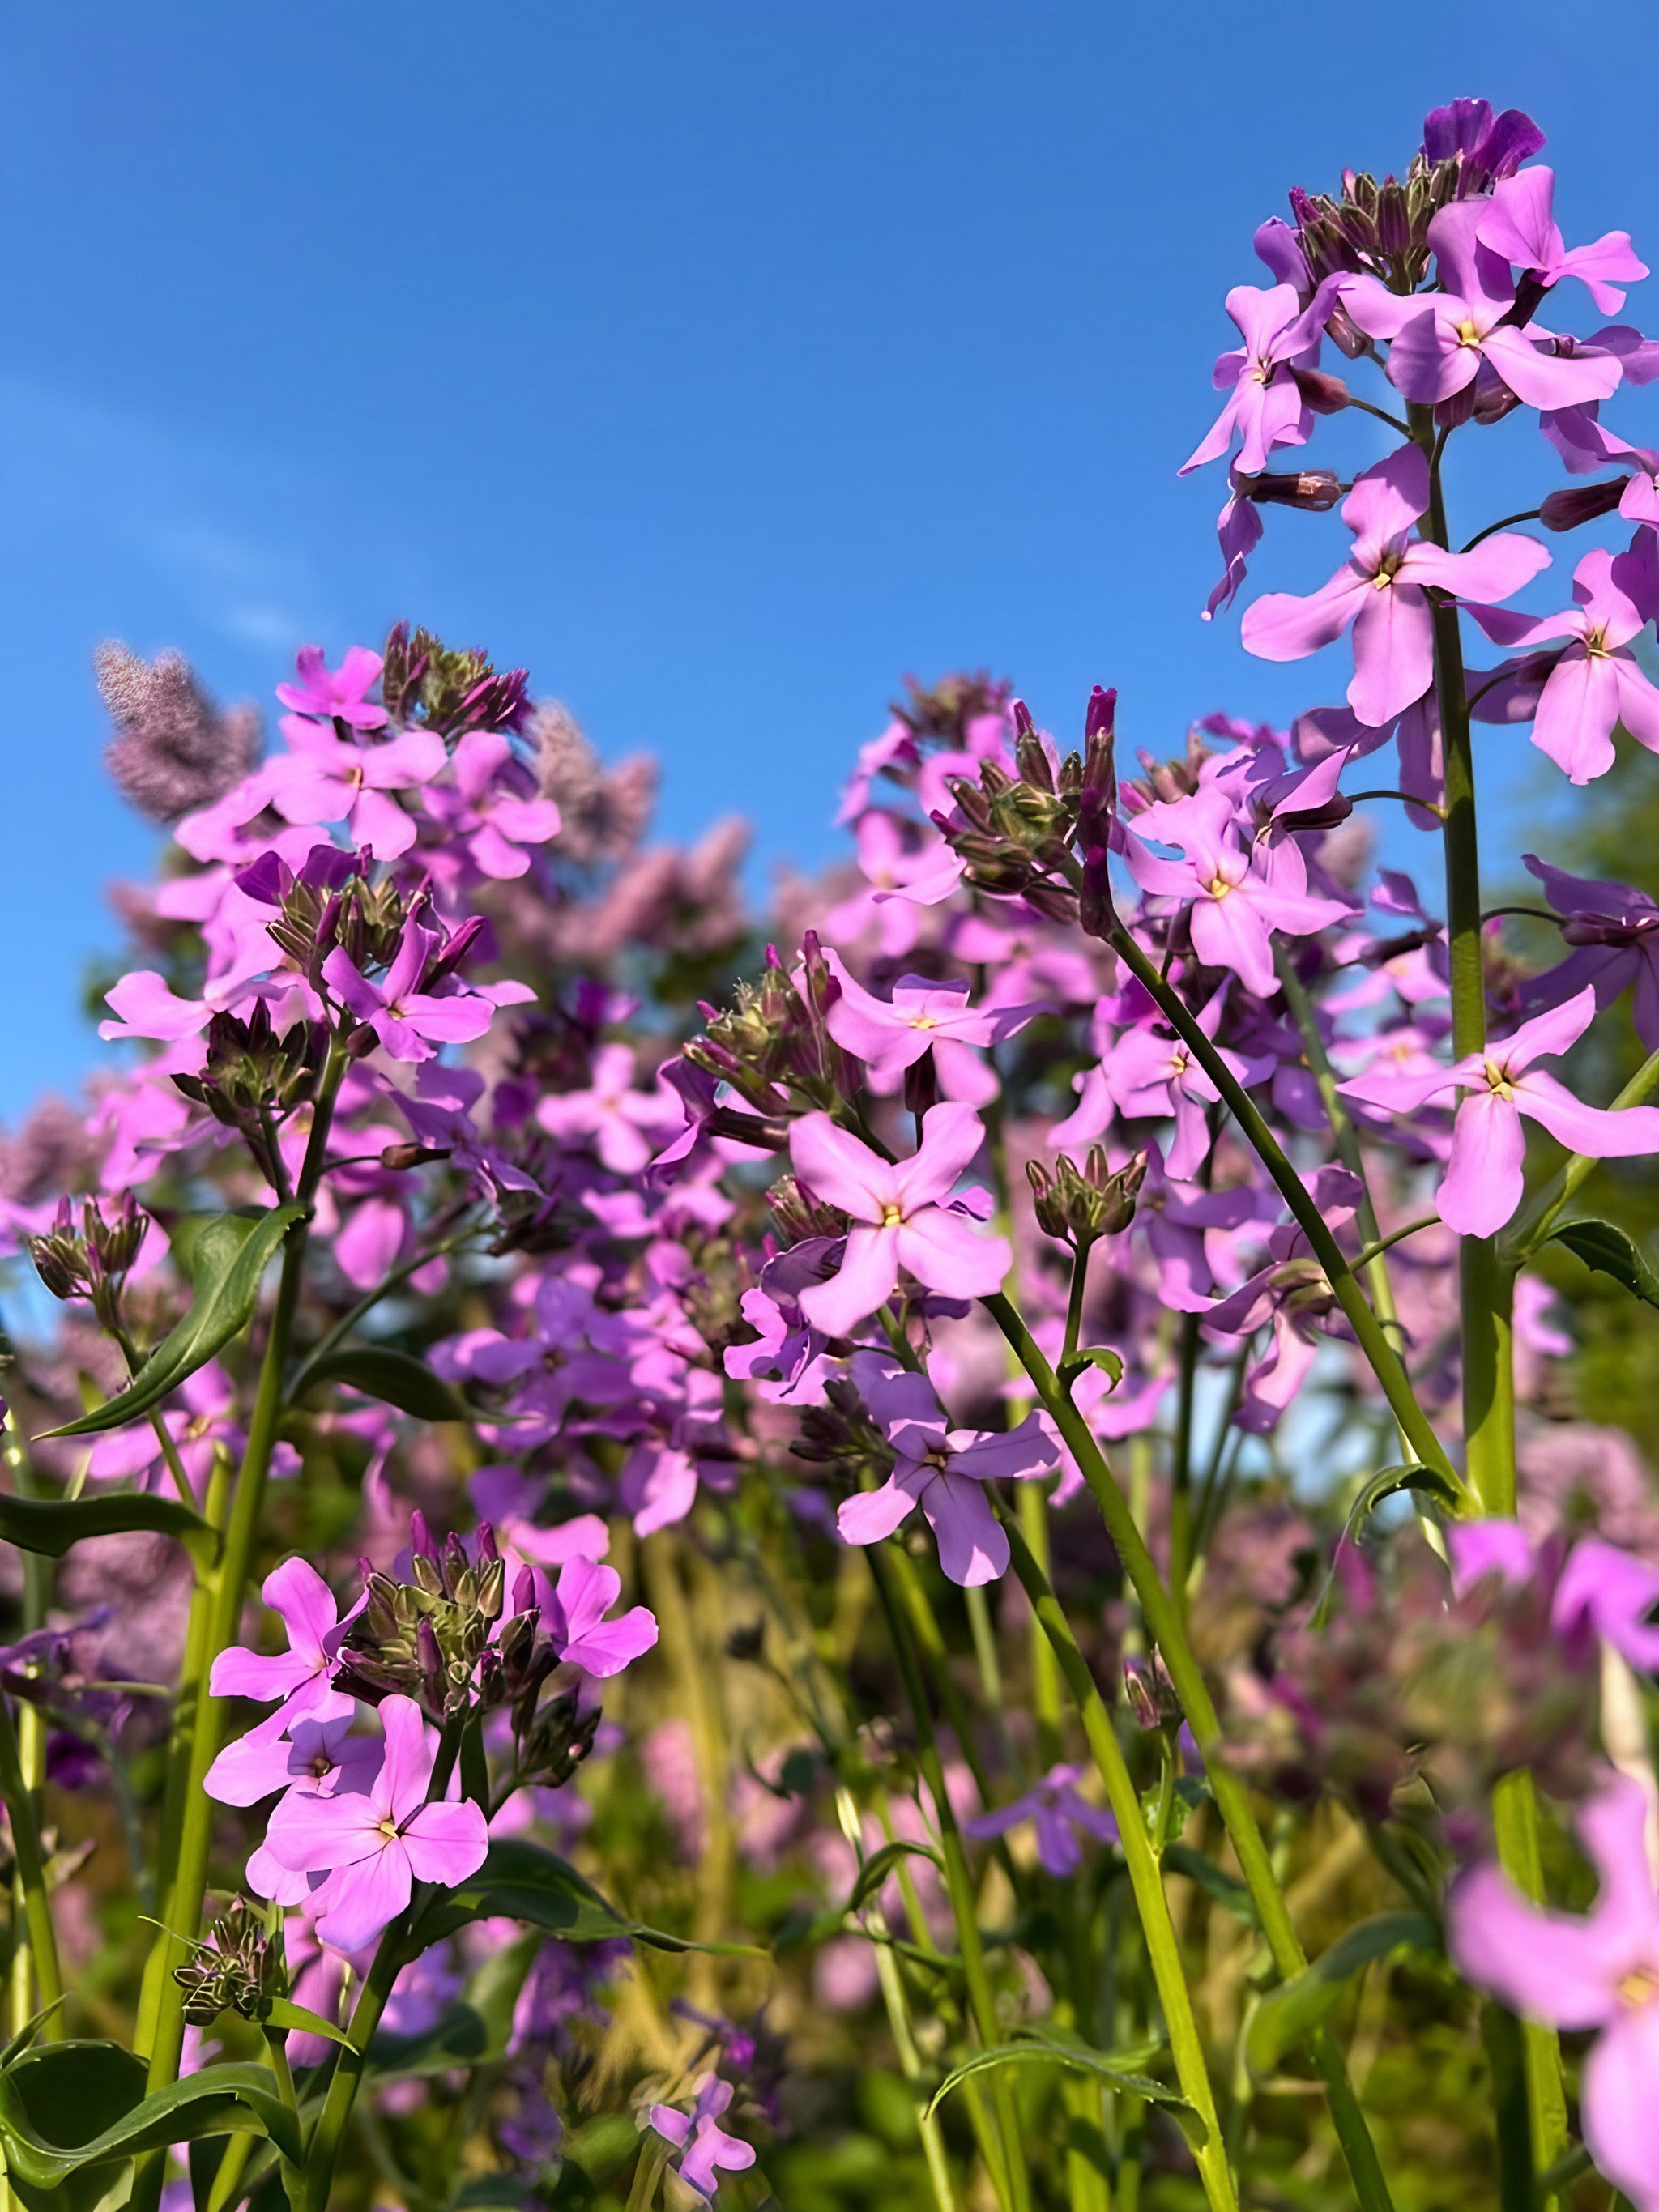 Hesperis matronalis Purple in full bloom under the sunlight with azure sky above